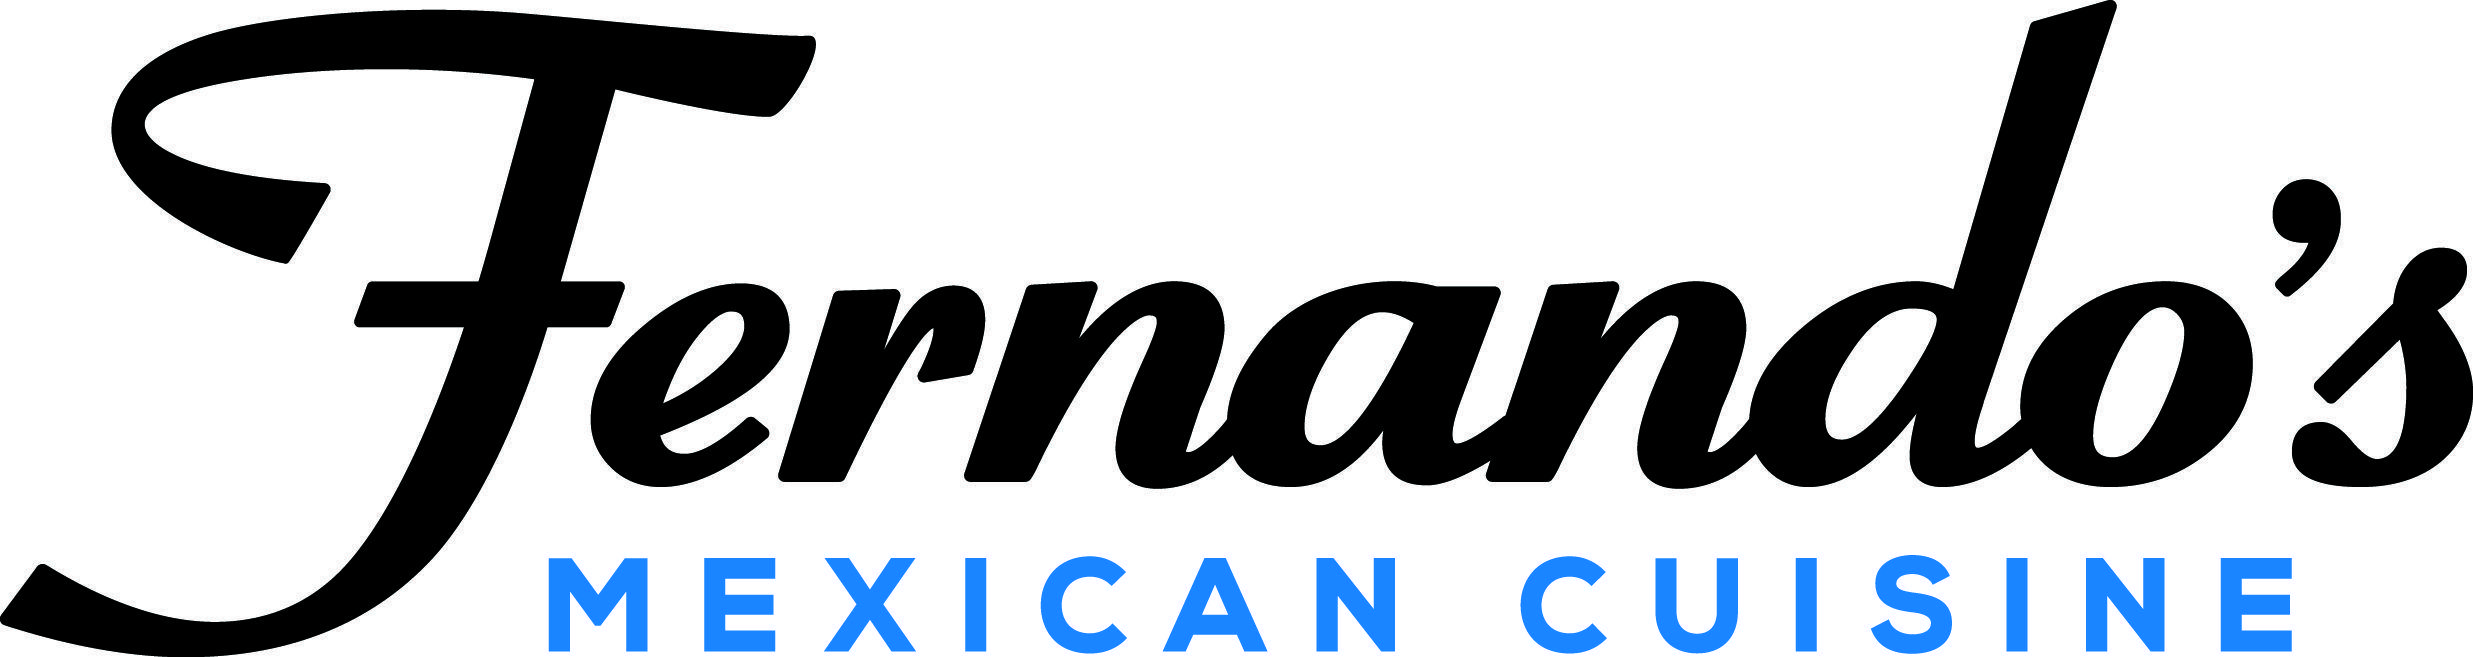 Mexican Company Logo - Fernando's Mexican Cuisine Company Logo |